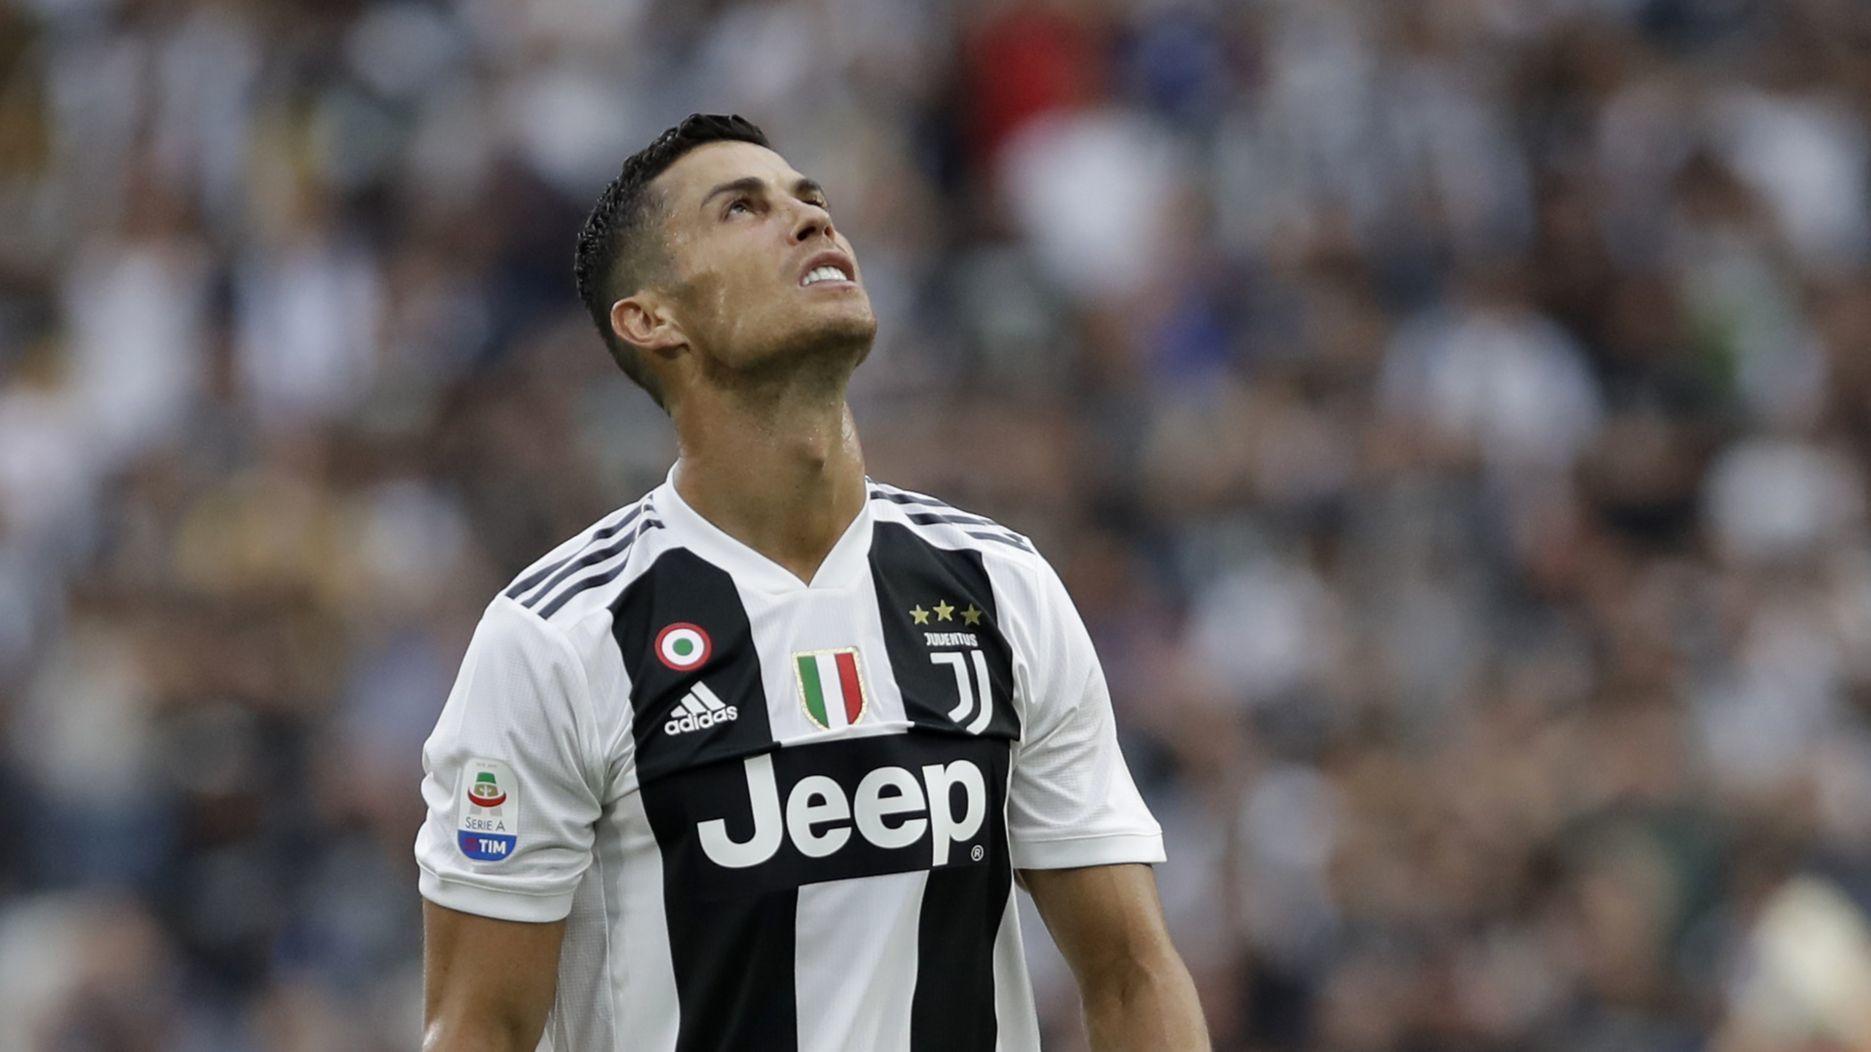 Don T Blindly Defend Cristiano Ronaldo — Or Any Athlete — Accused Of Misdeeds Chicago Tribune